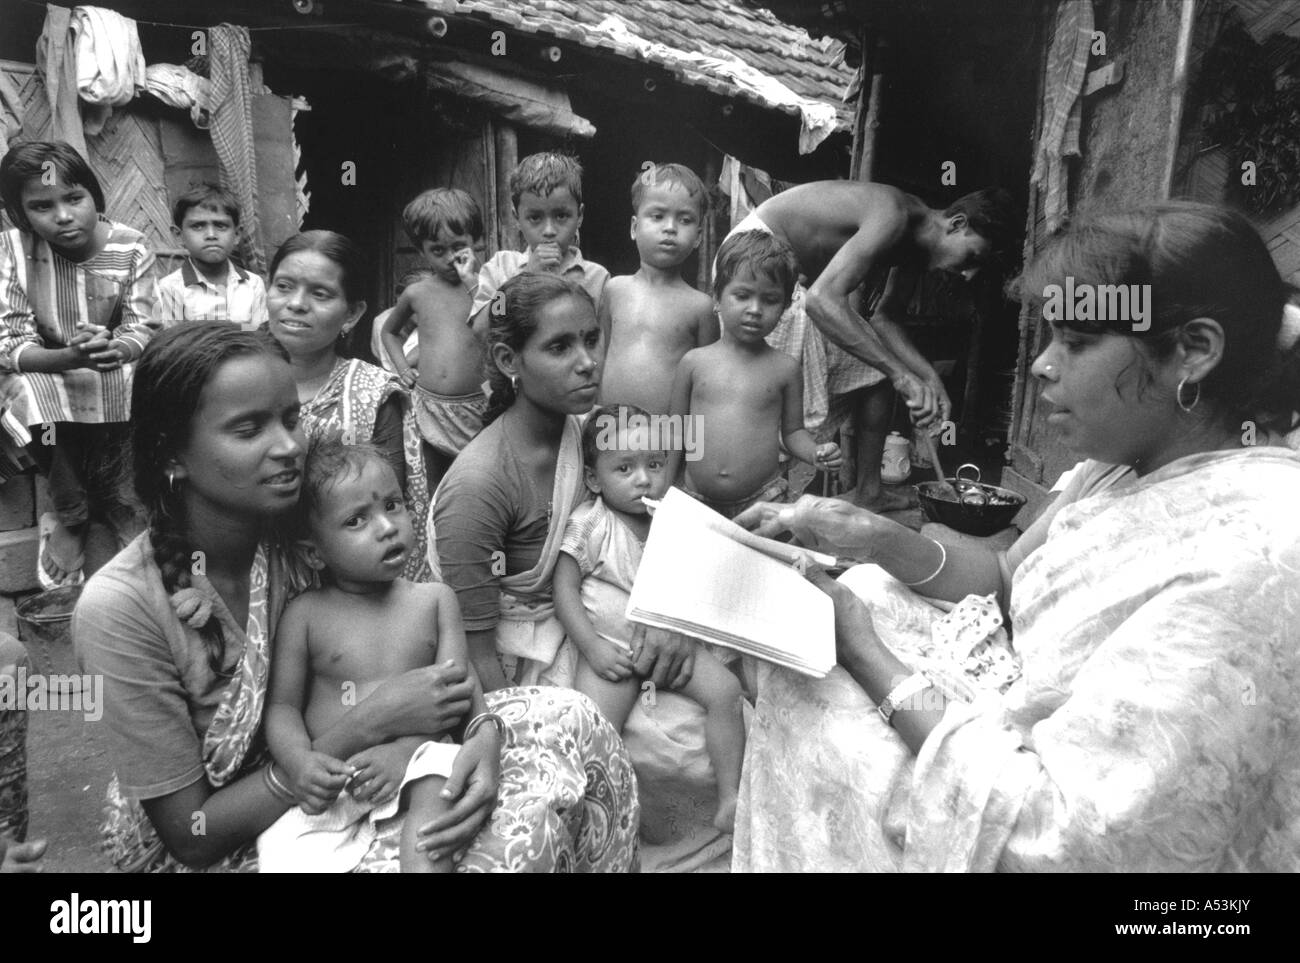 Painet ha1289 077 black and white health awareness community worker visiting family slum calcutta india country developing Stock Photo